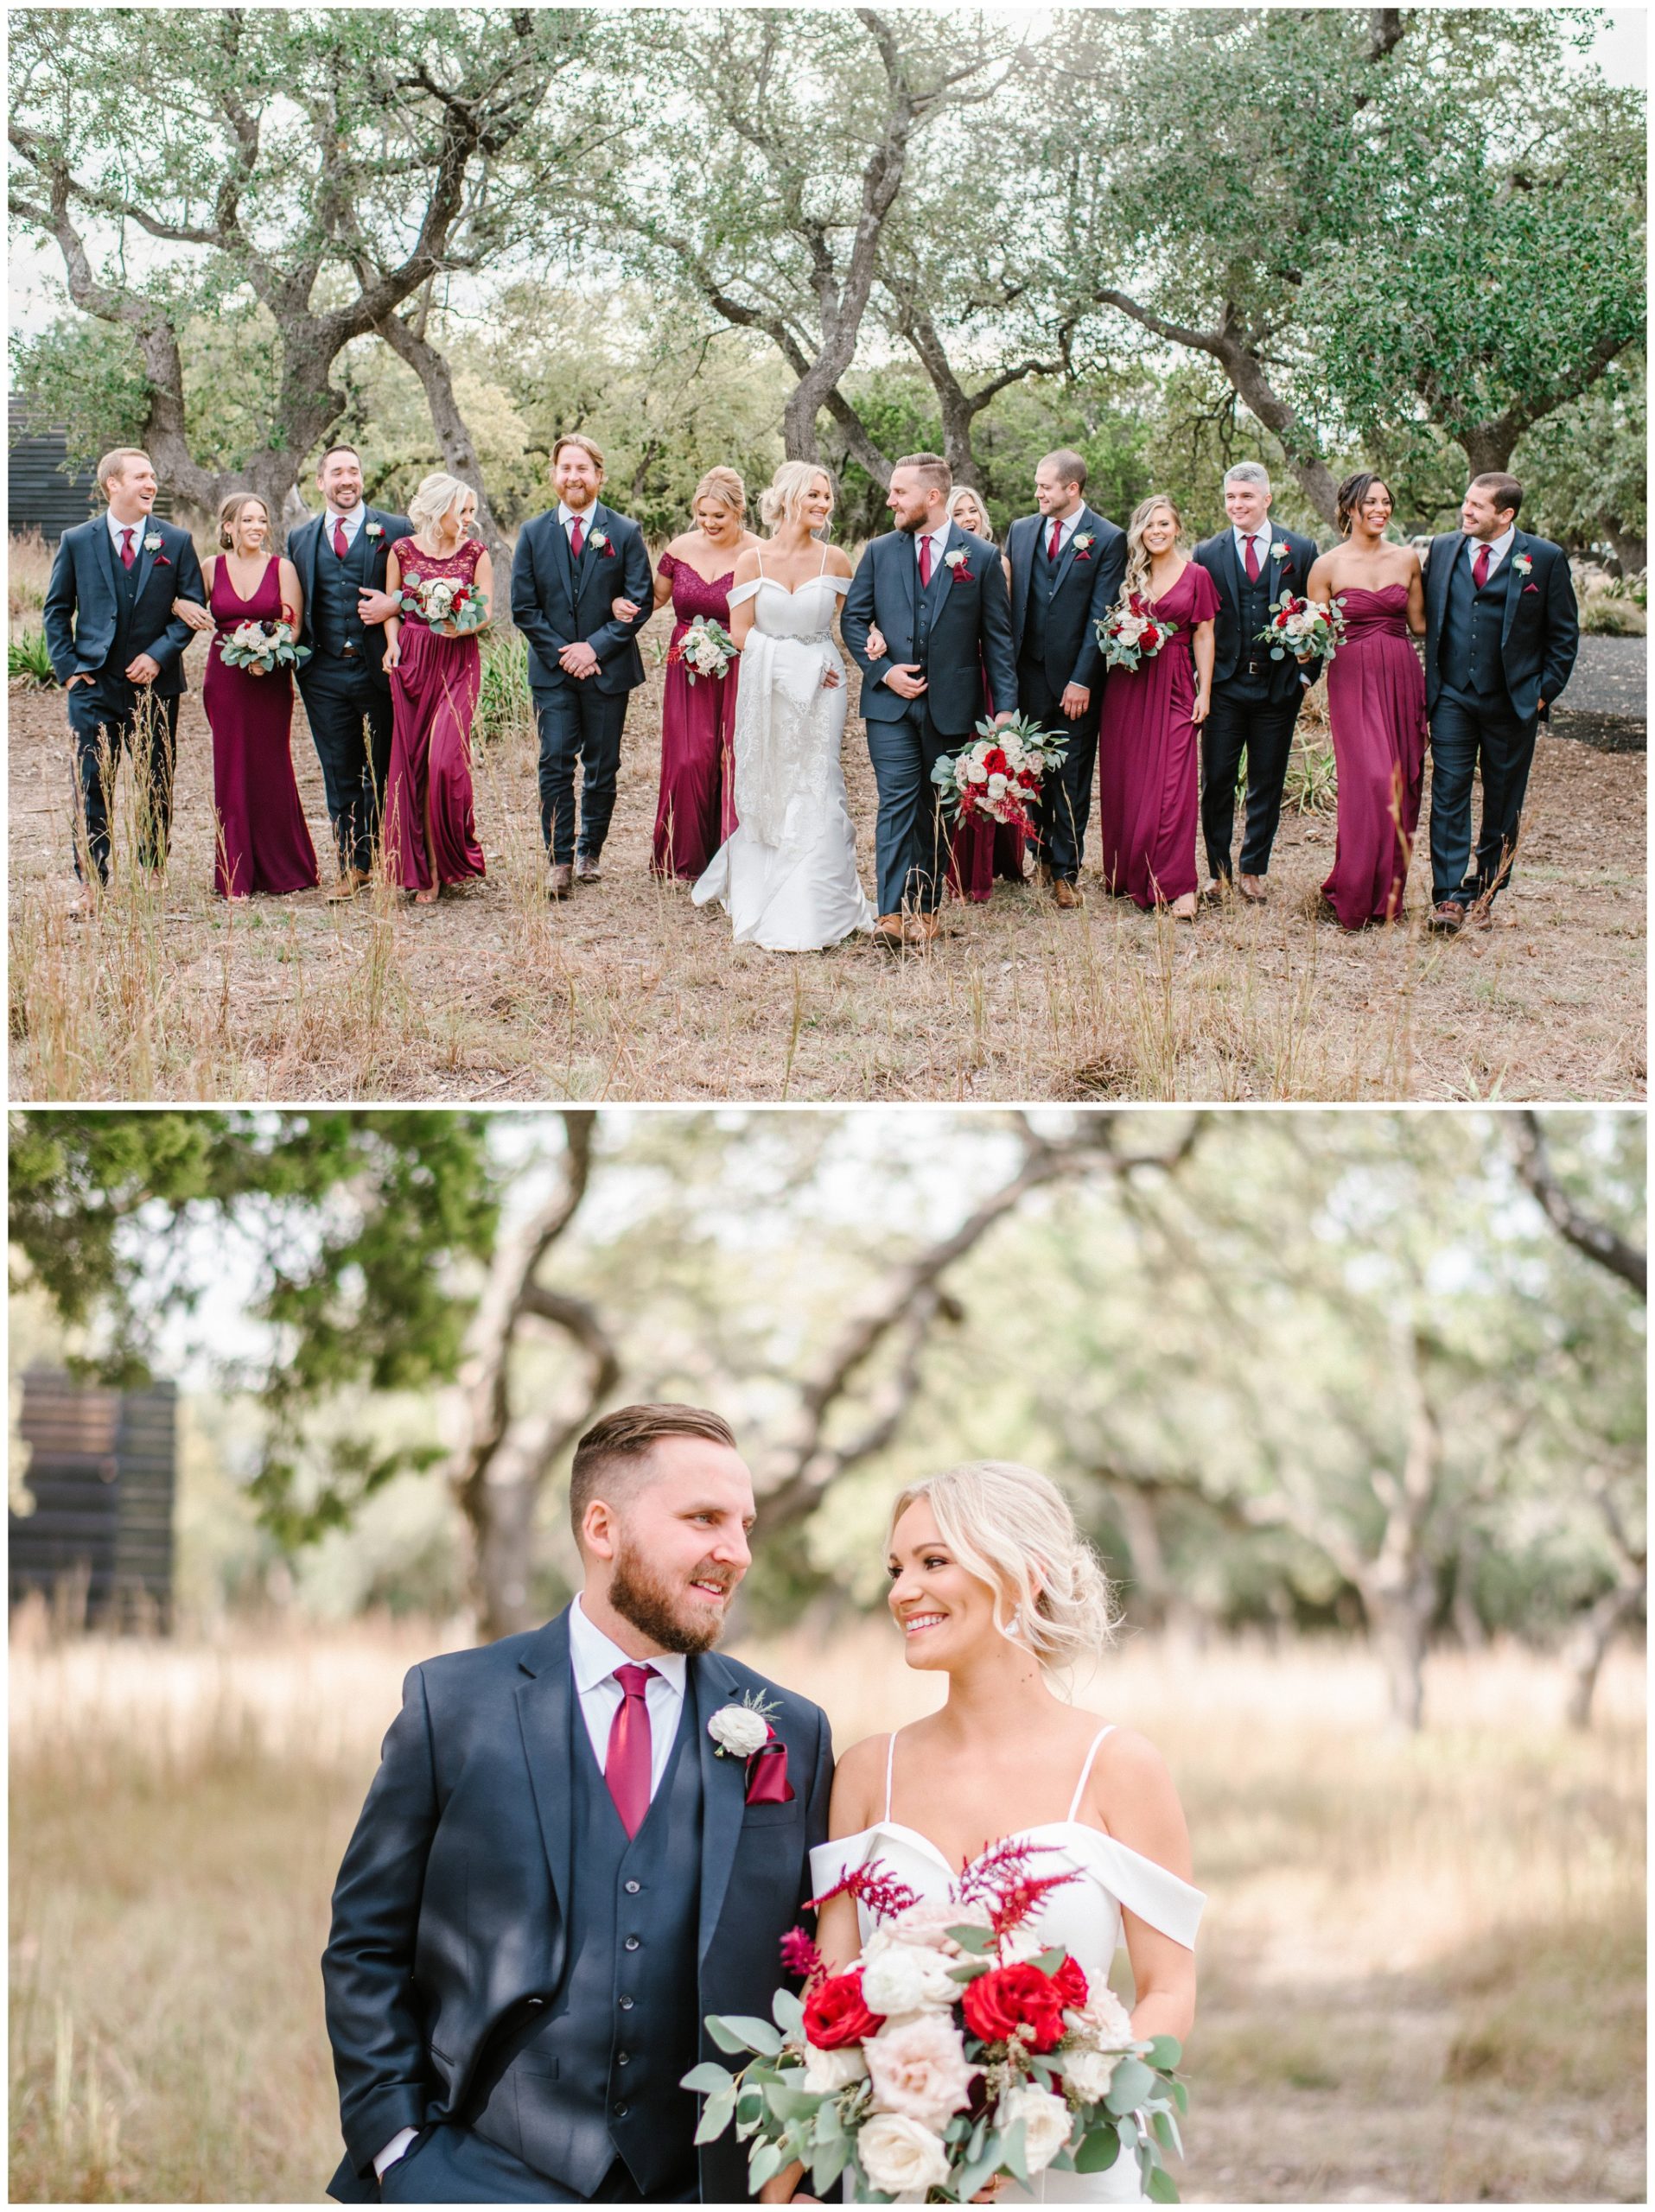 Burgundy and navy bridal party attire, winter wedding inspiration, Cedars Ranch Venue, Joslyn Holtfort Photography